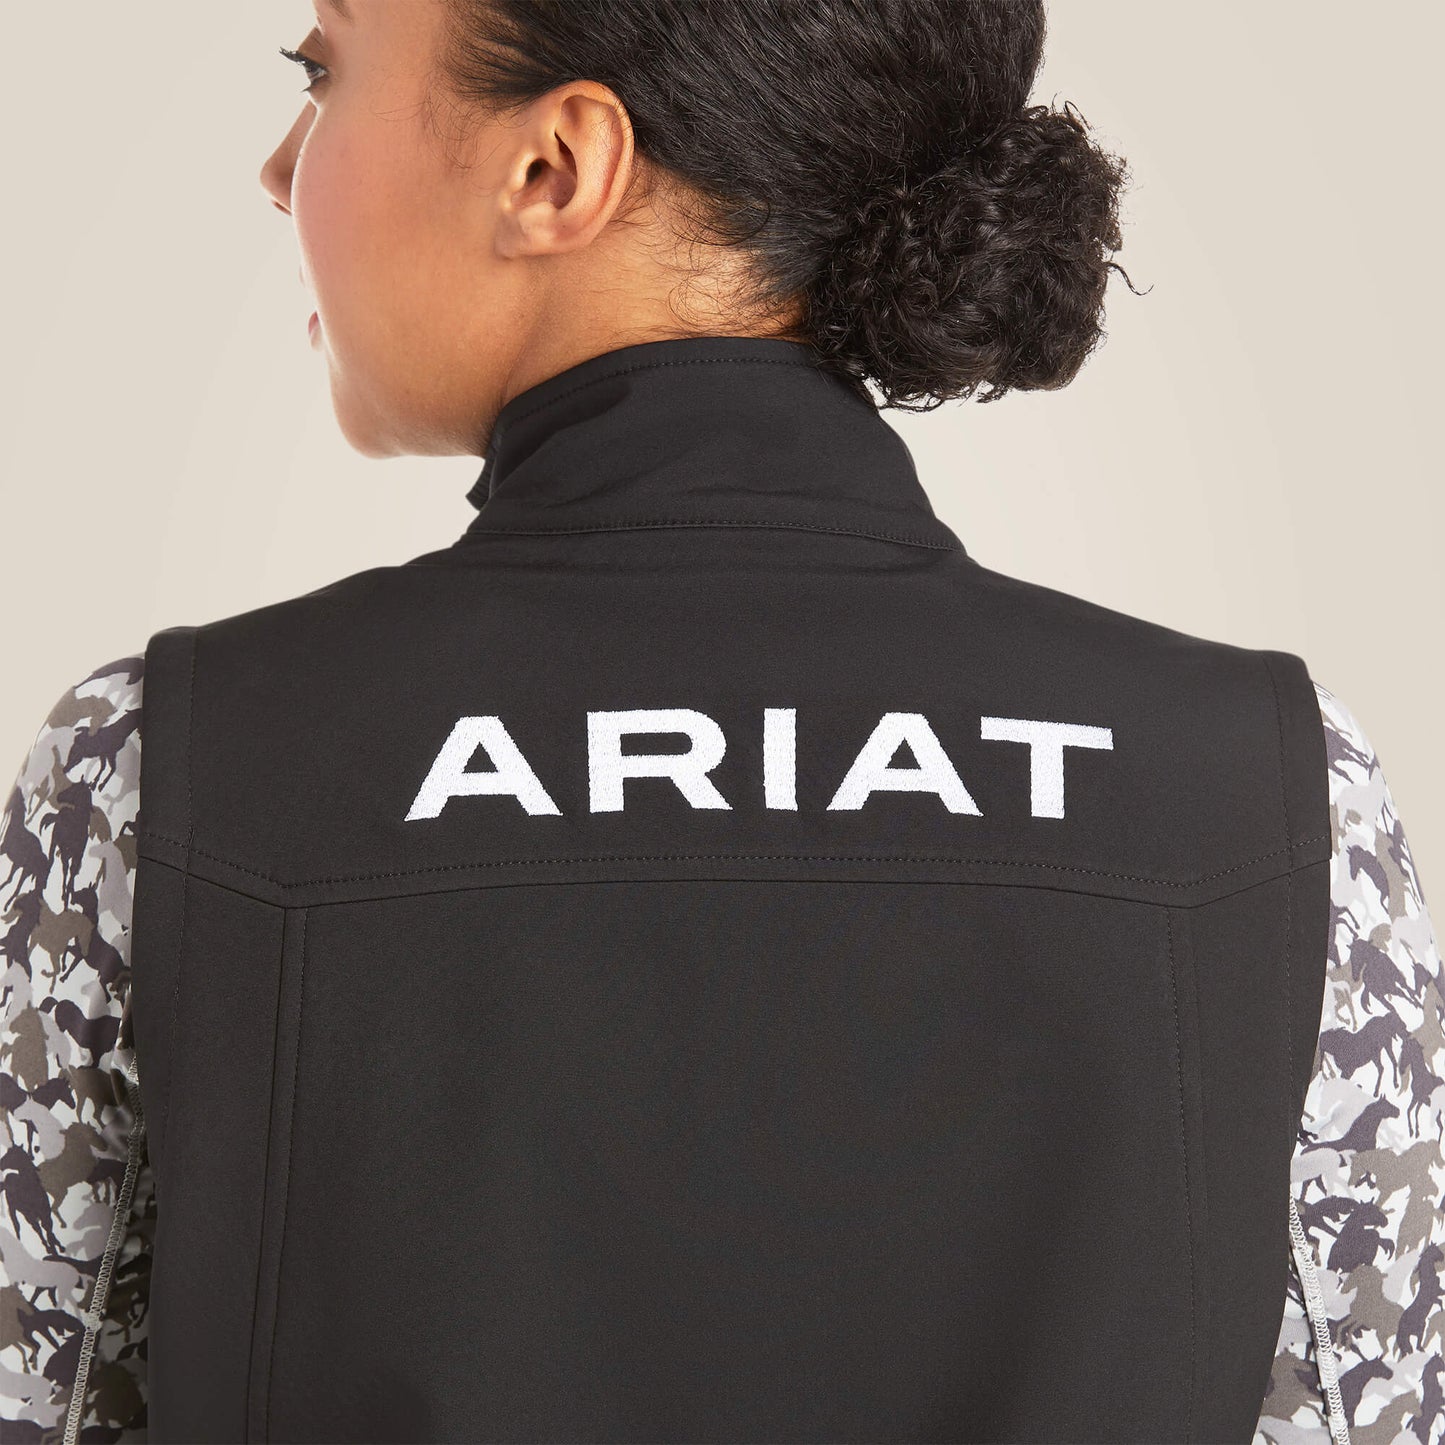 Ariat New Team Softshell Vest 10020762